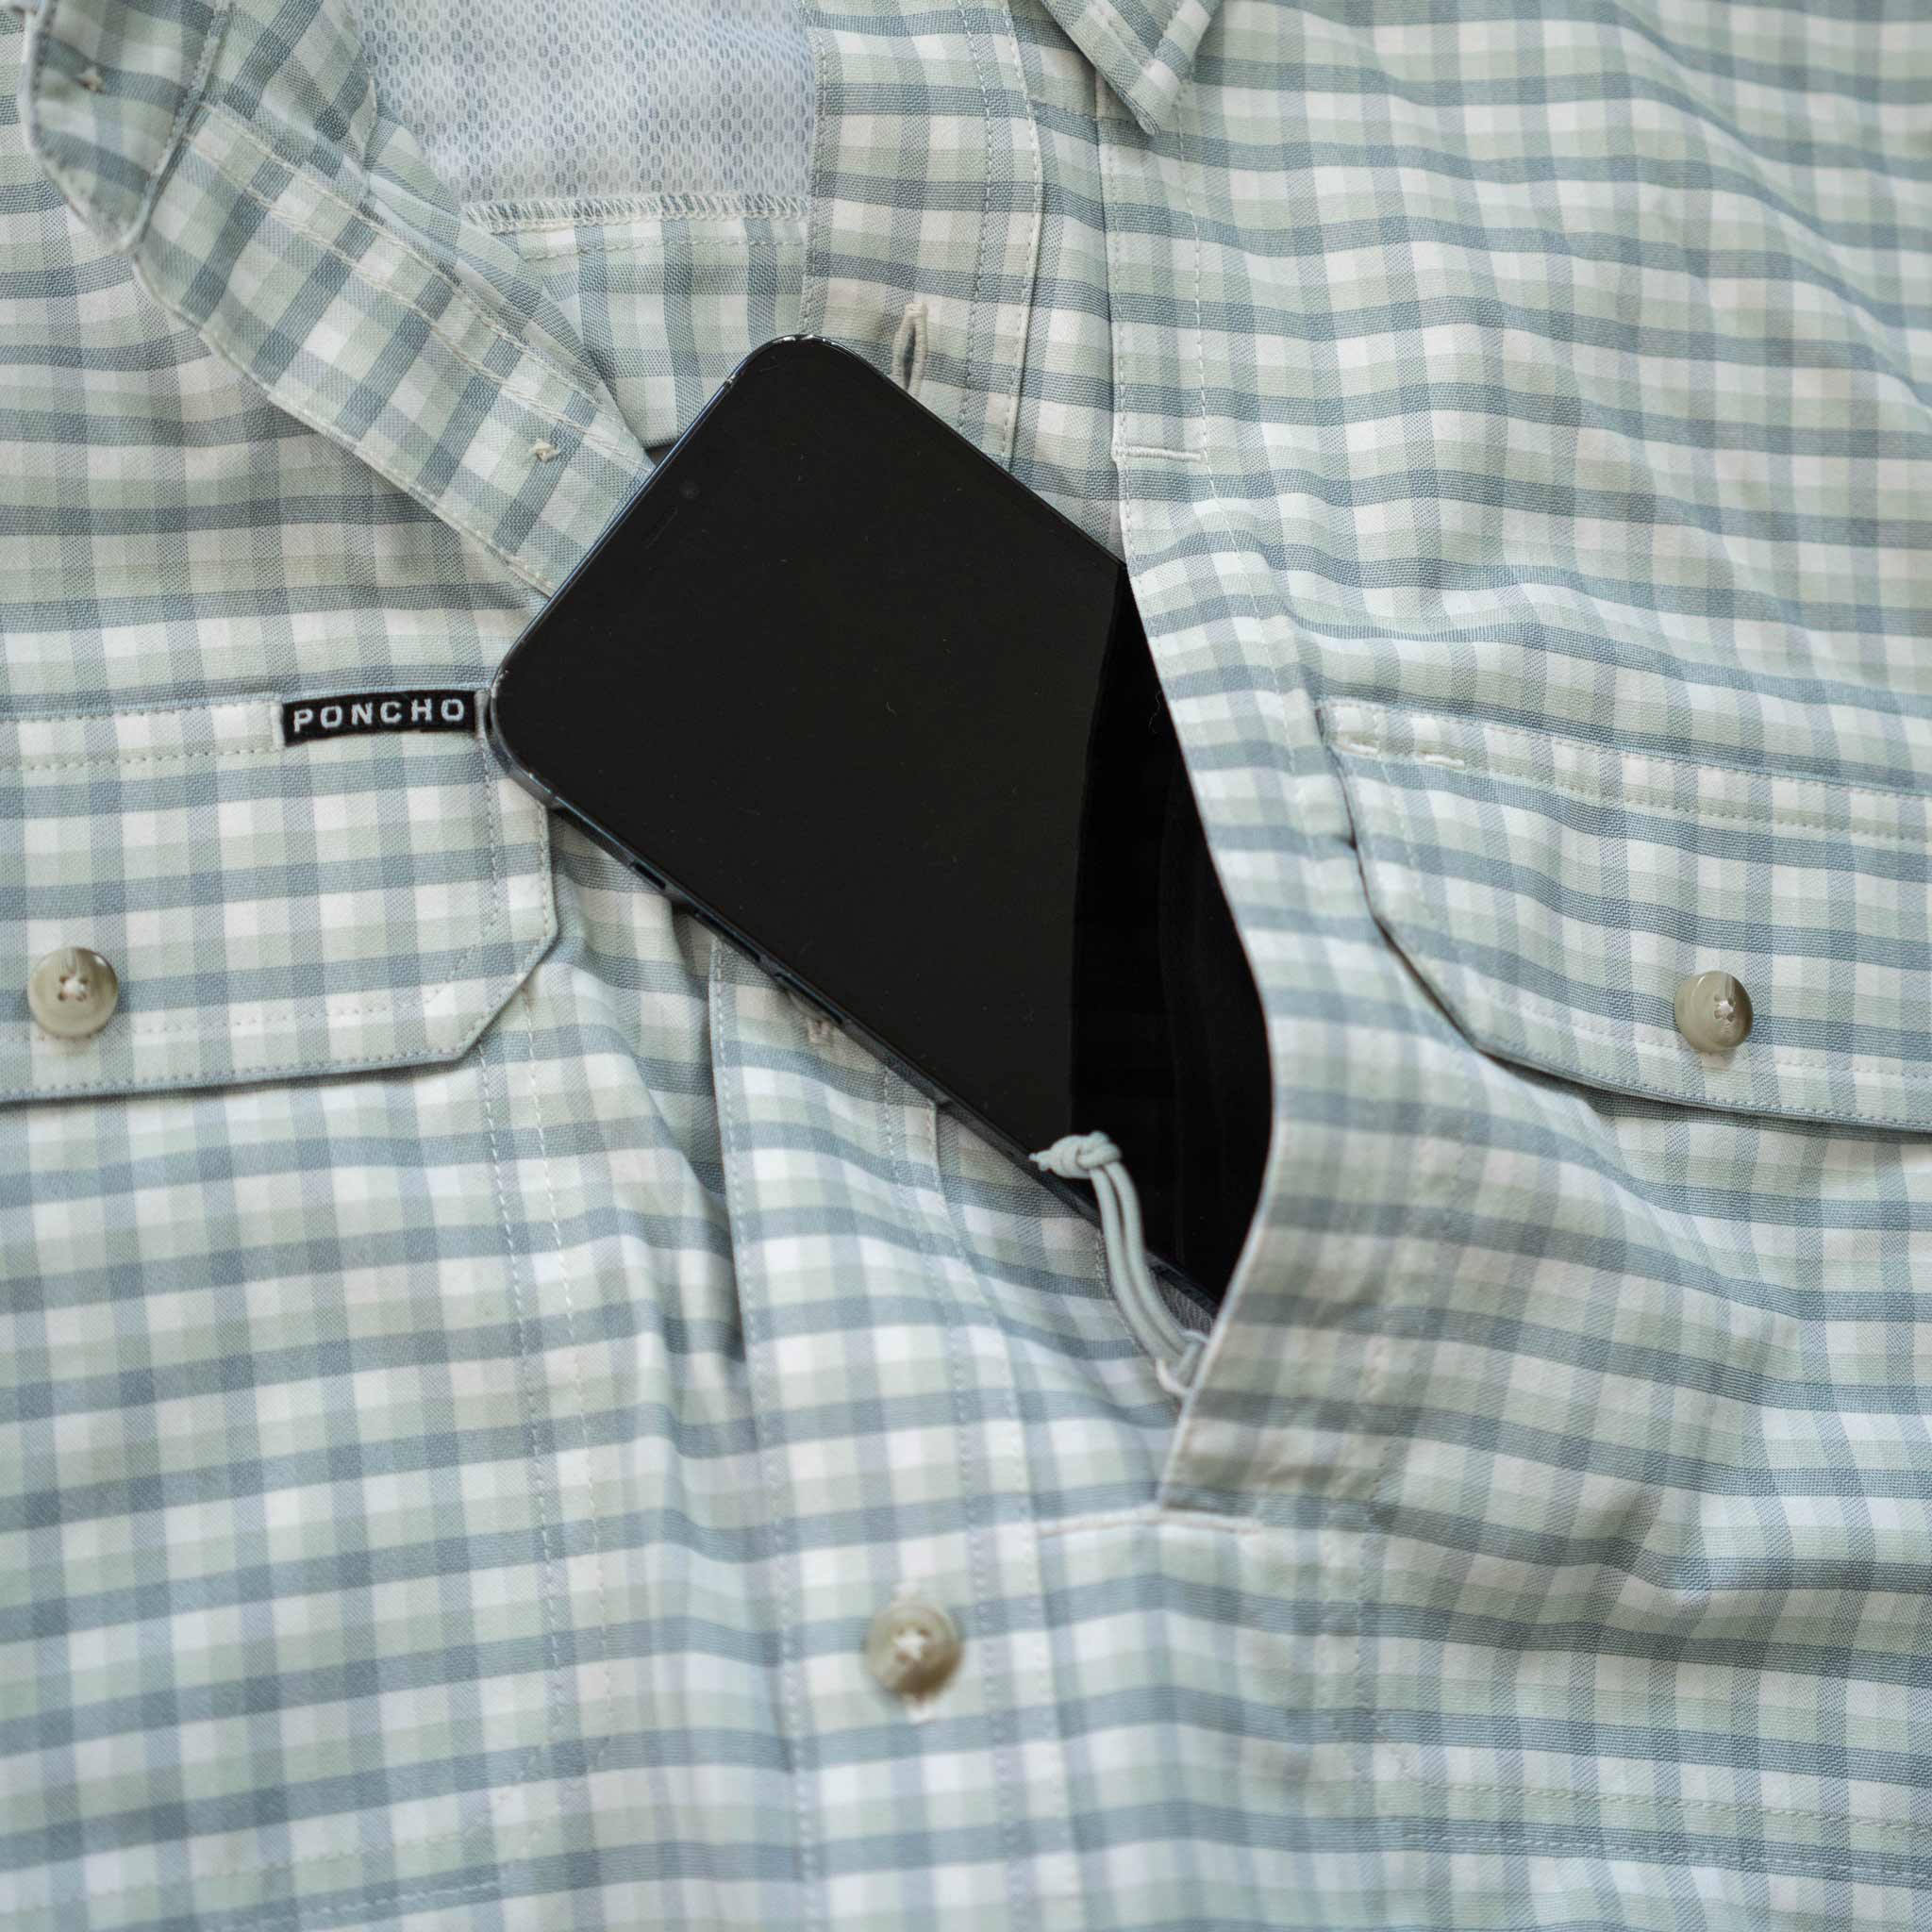 Close up lens of phone pocket